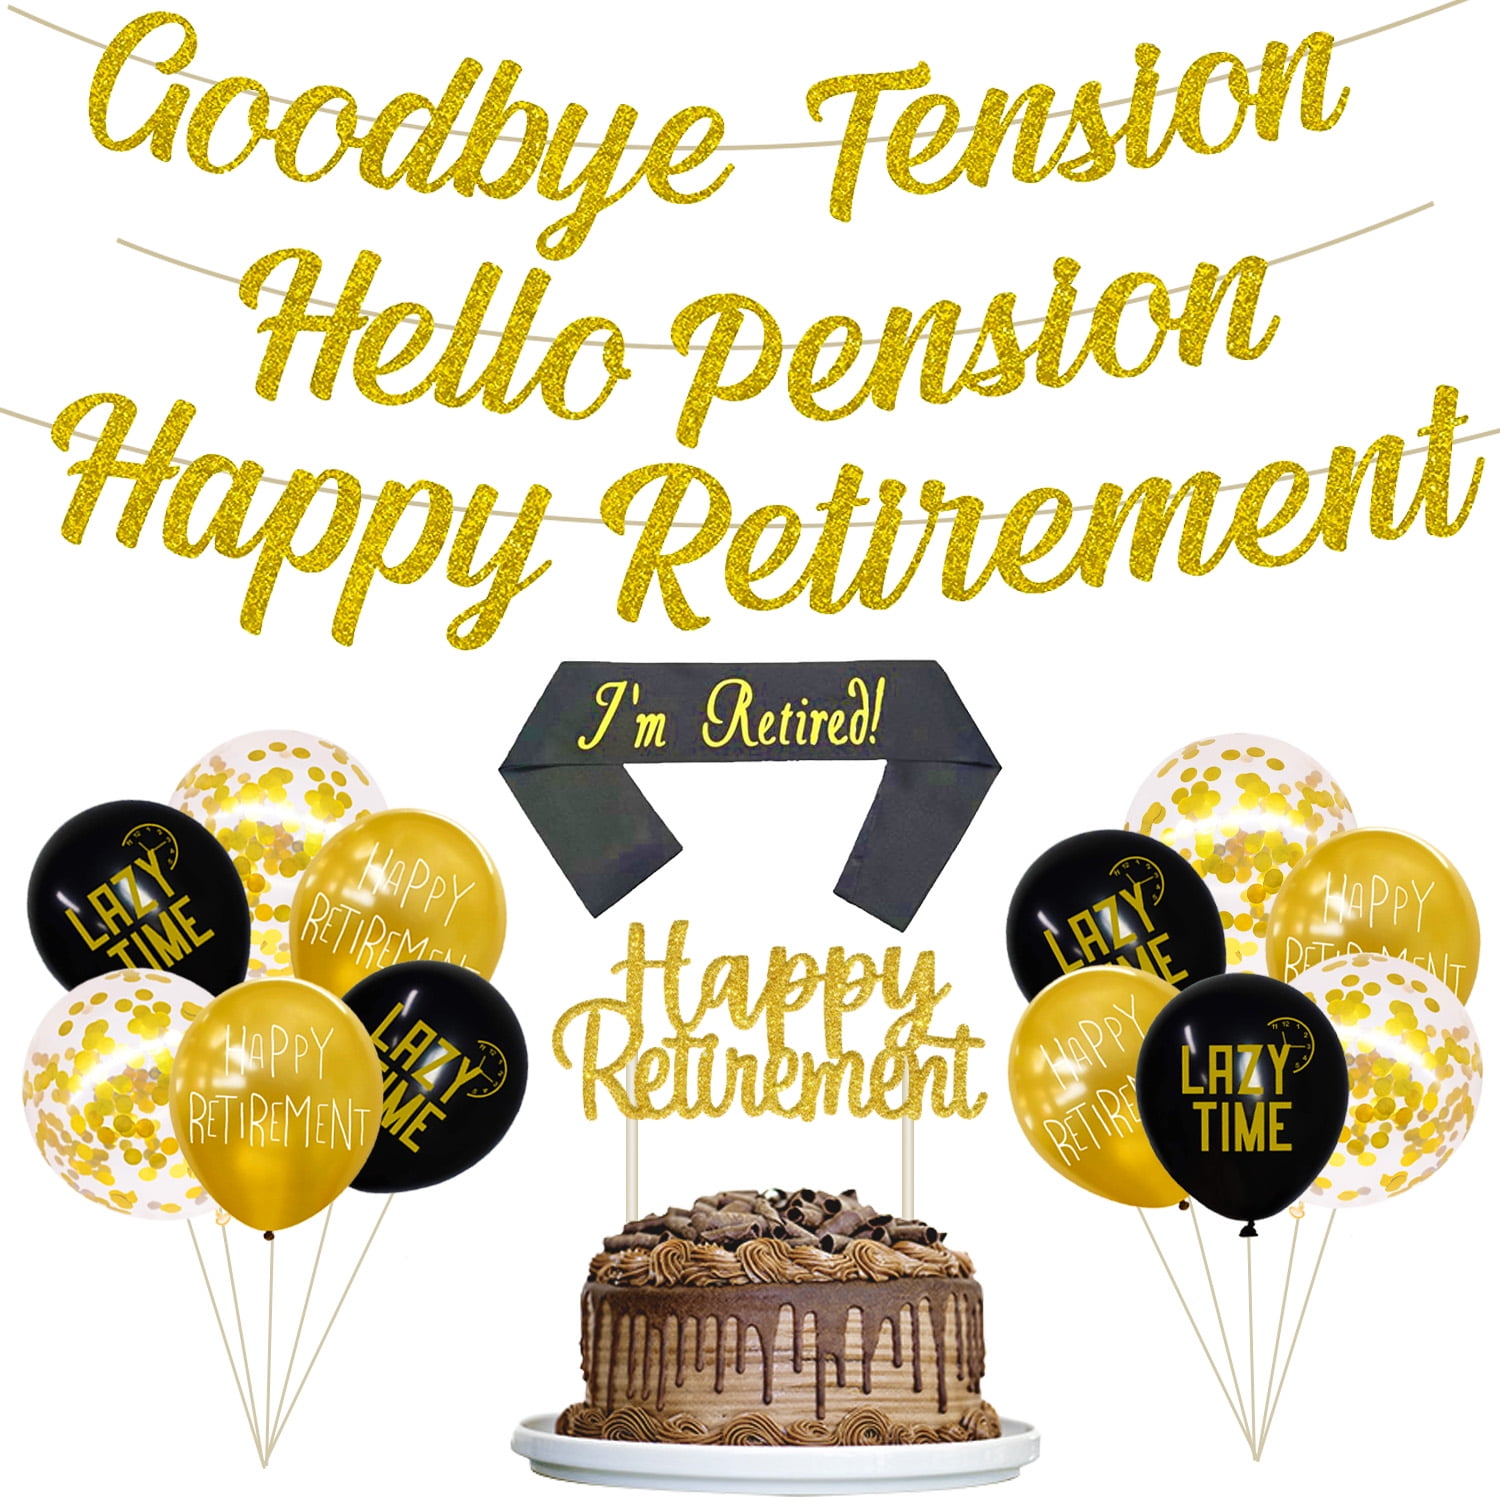 Happy Retirement Celebration Banner 65in x 33 1/2in